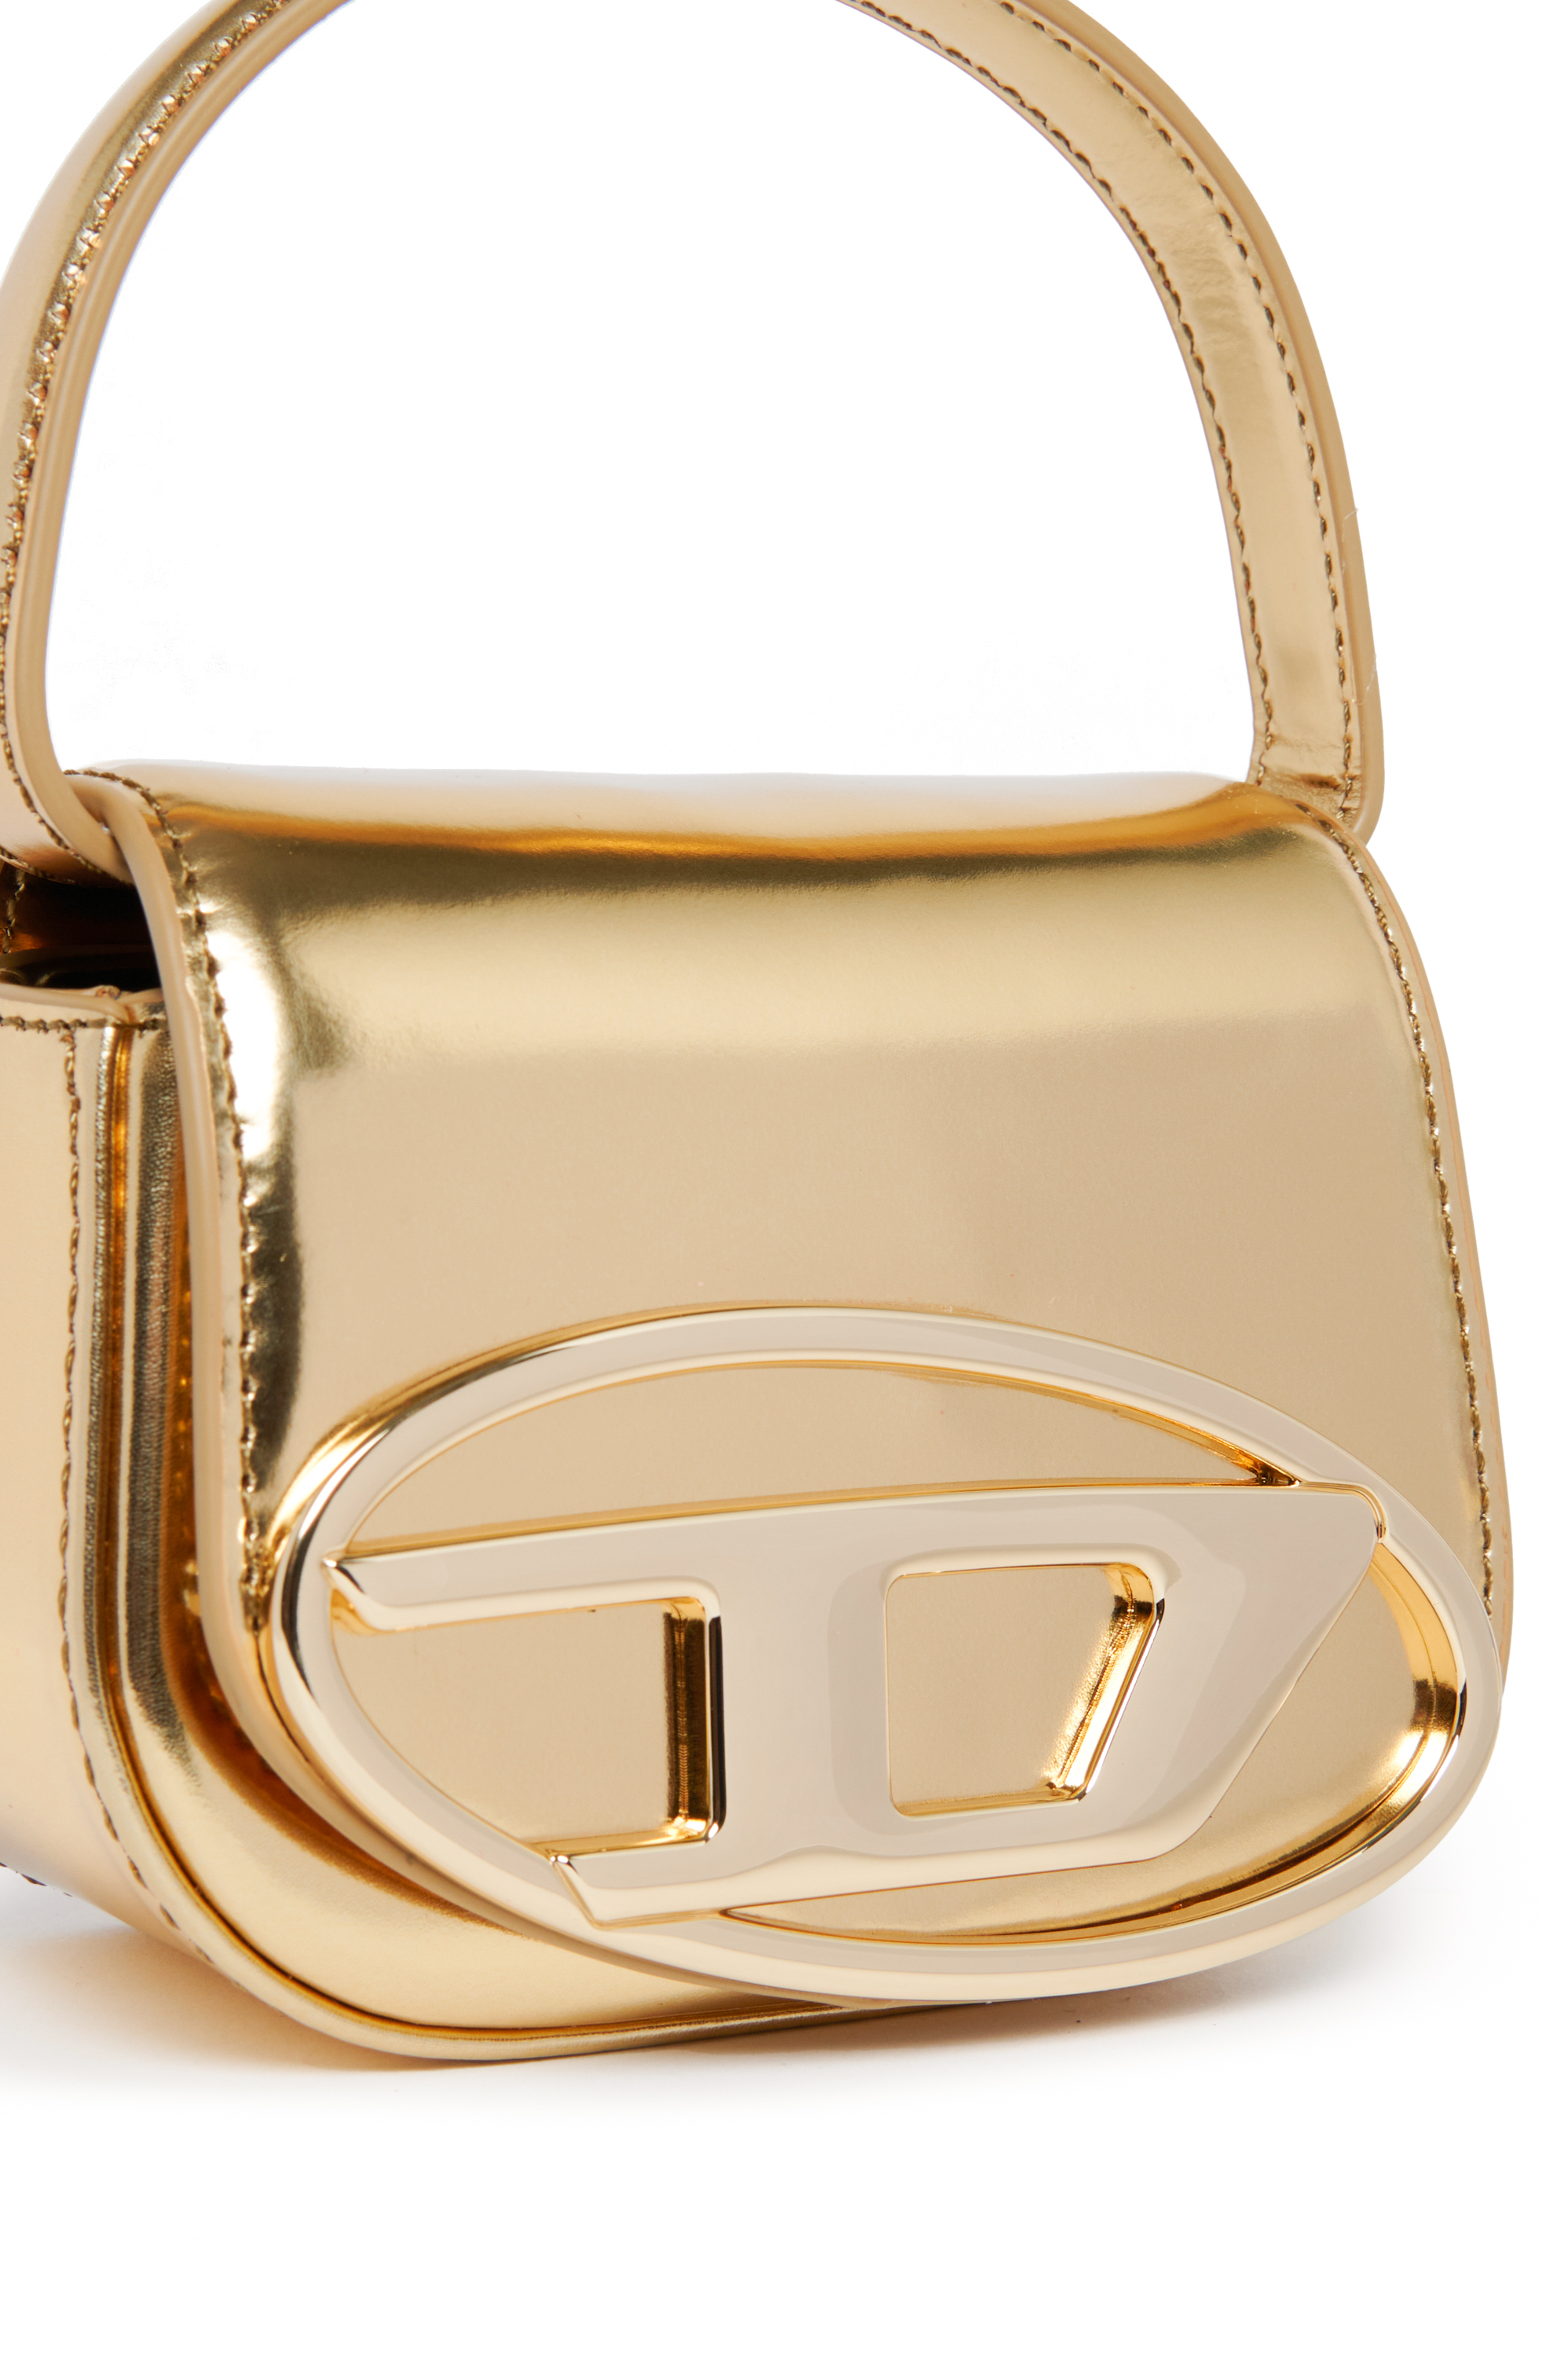 Diesel - 1DR XS, Woman Iconic mini bag in metallic leather in Oro - Image 4